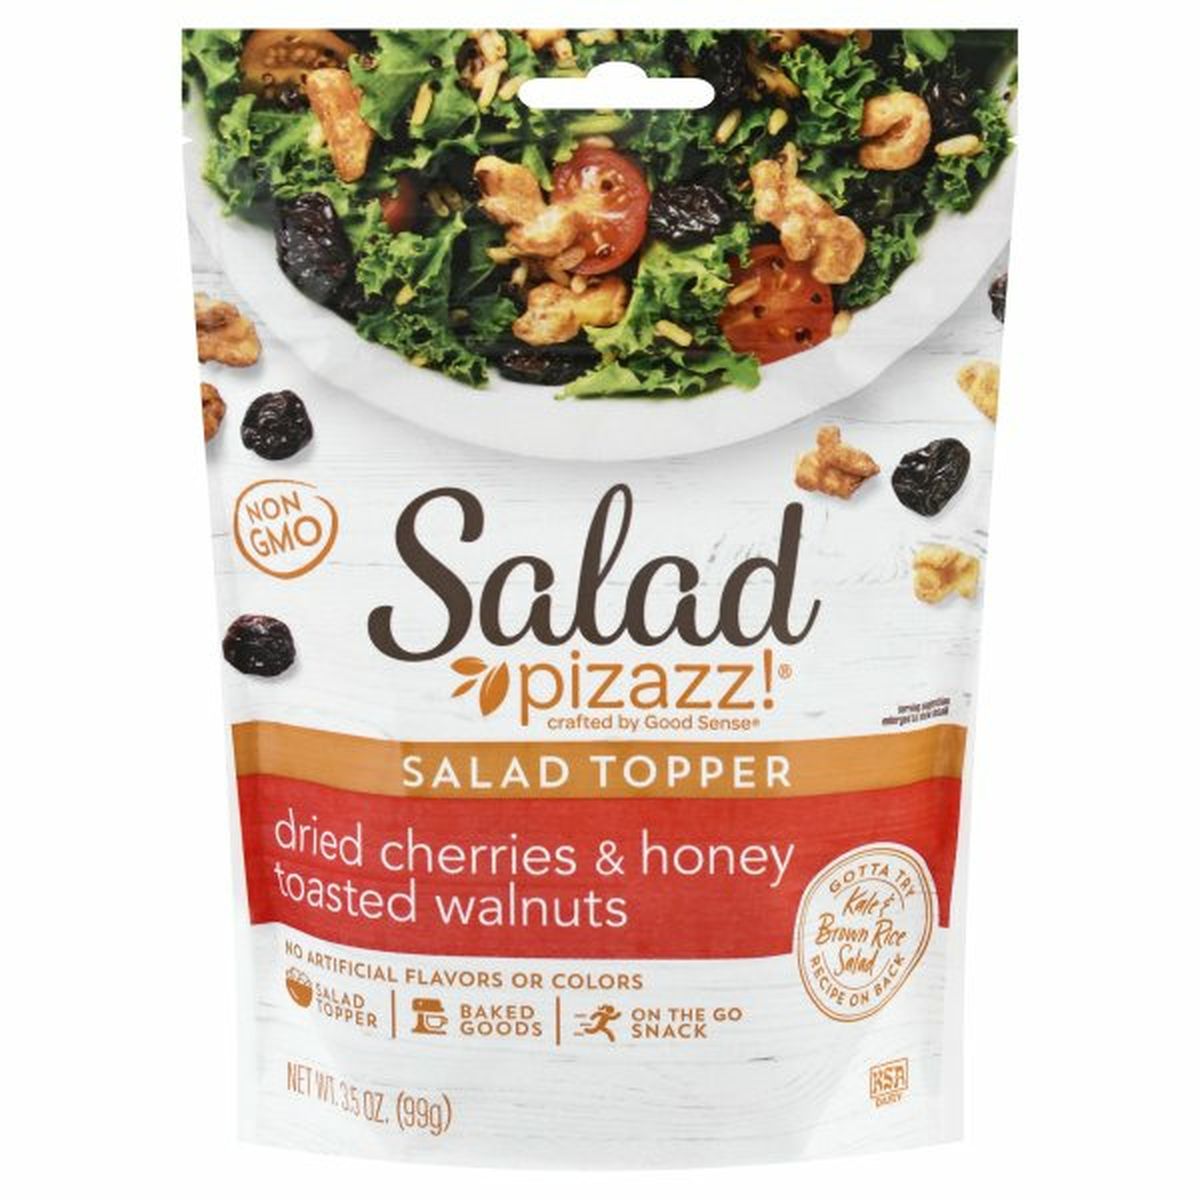 Calories in Salad Pizazz!ï¿½ Salad Topper, Dried Cherries & Honey Toasted Walnuts